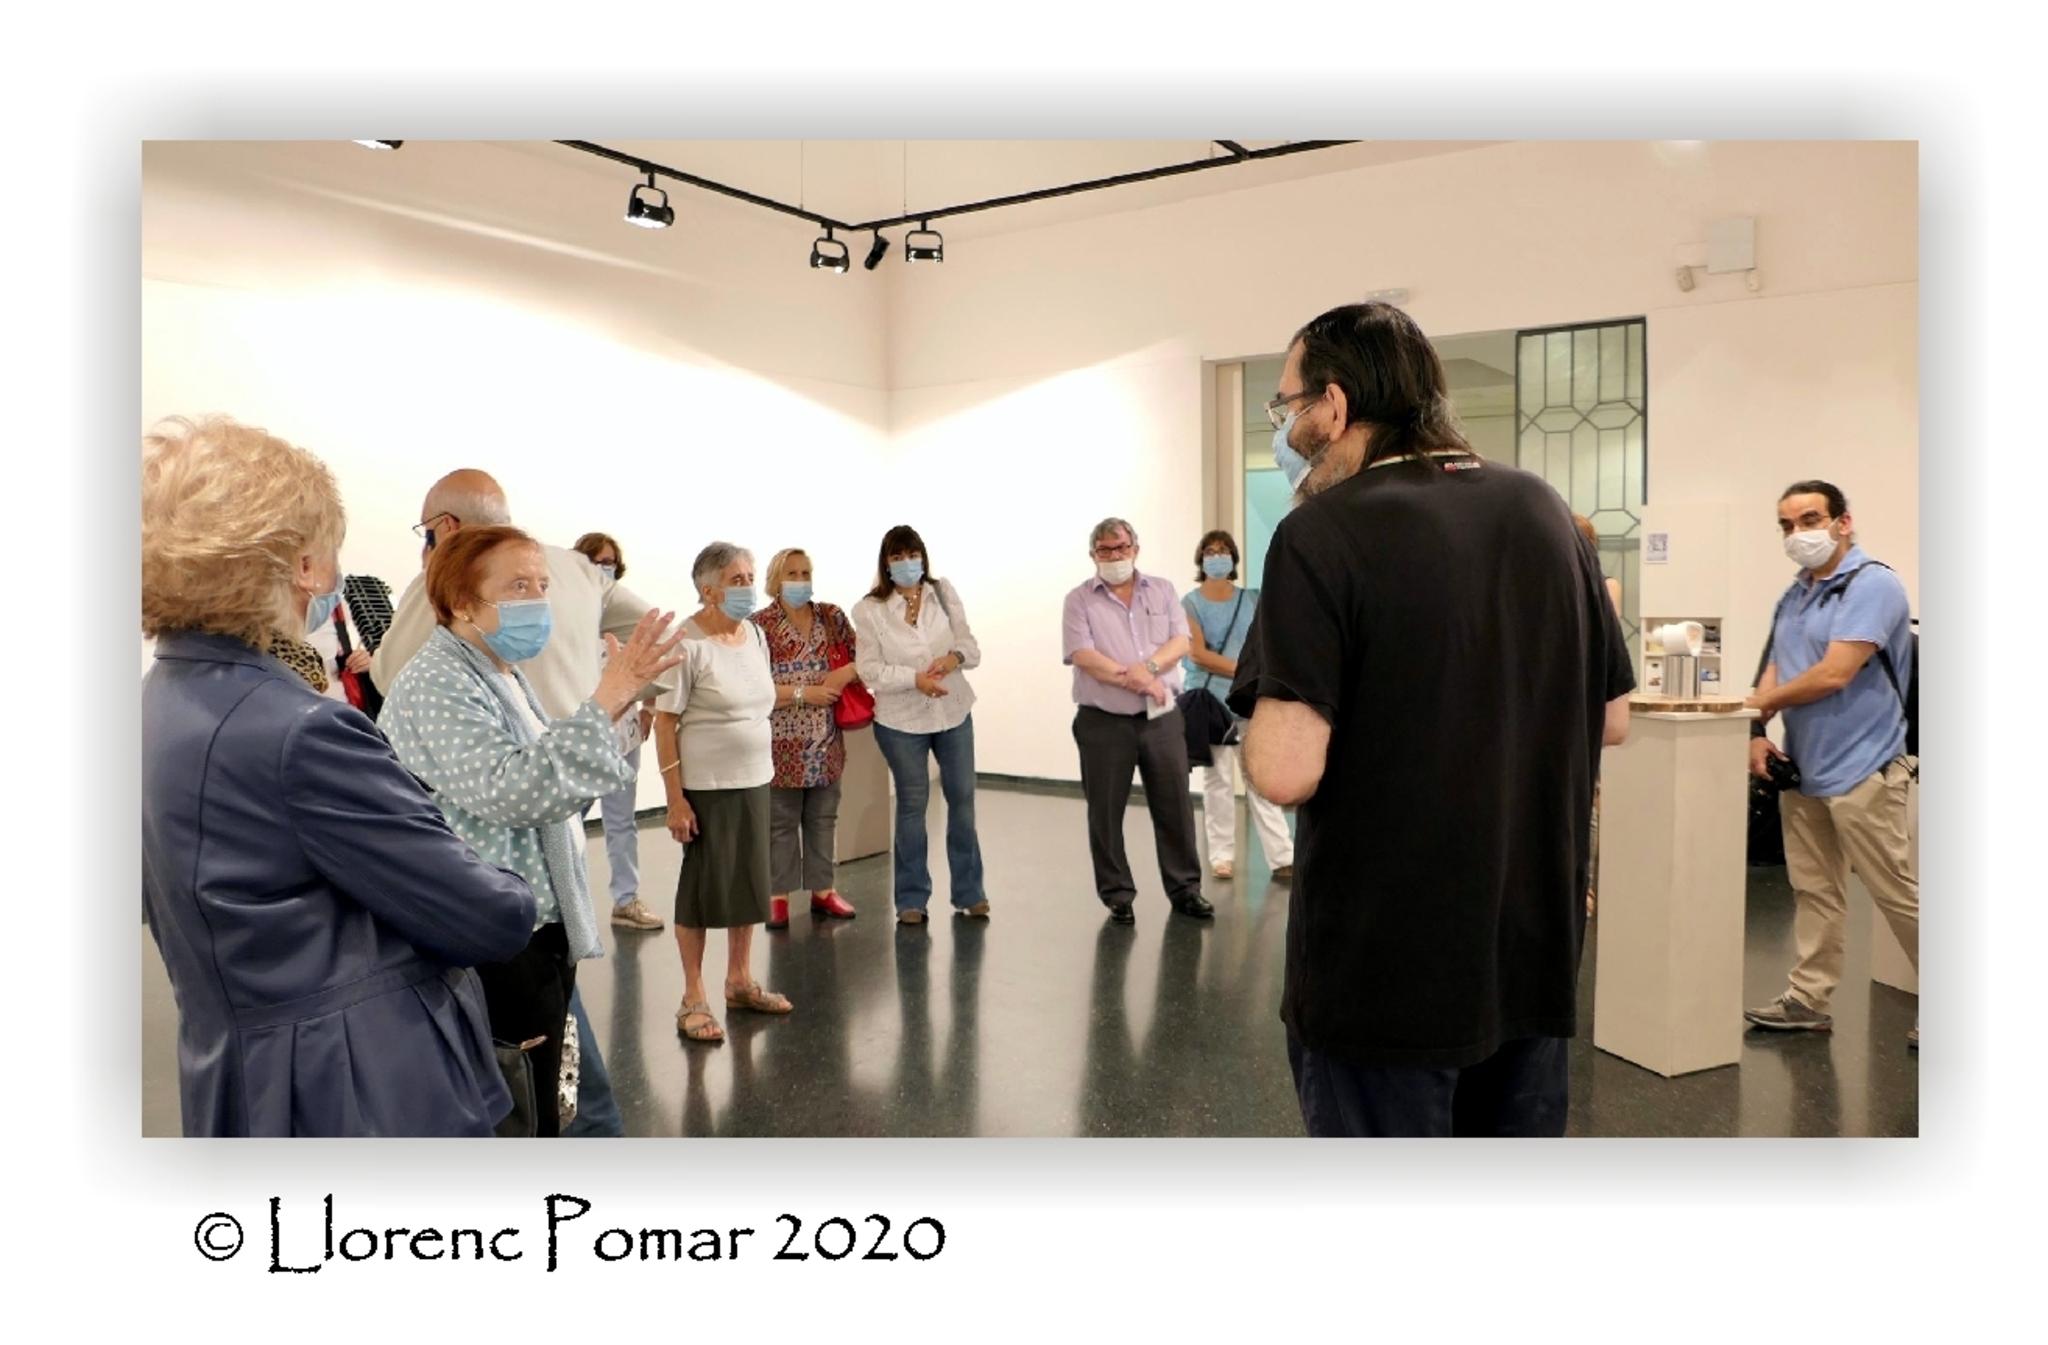  Llorenc Pomar 2020